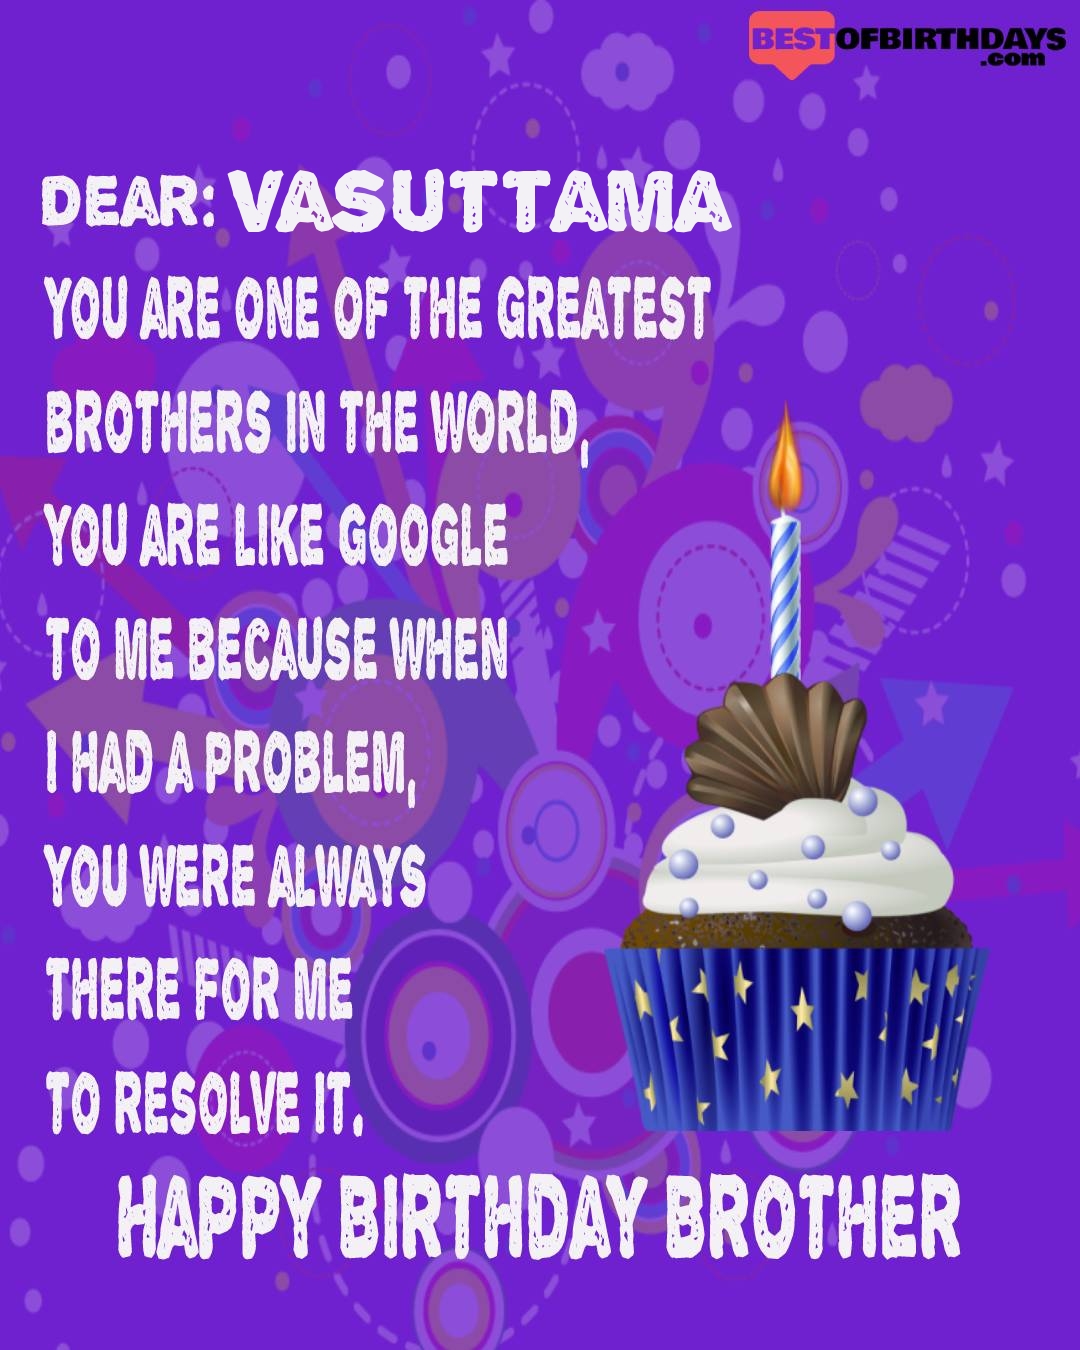 Happy birthday vasuttama bhai brother bro